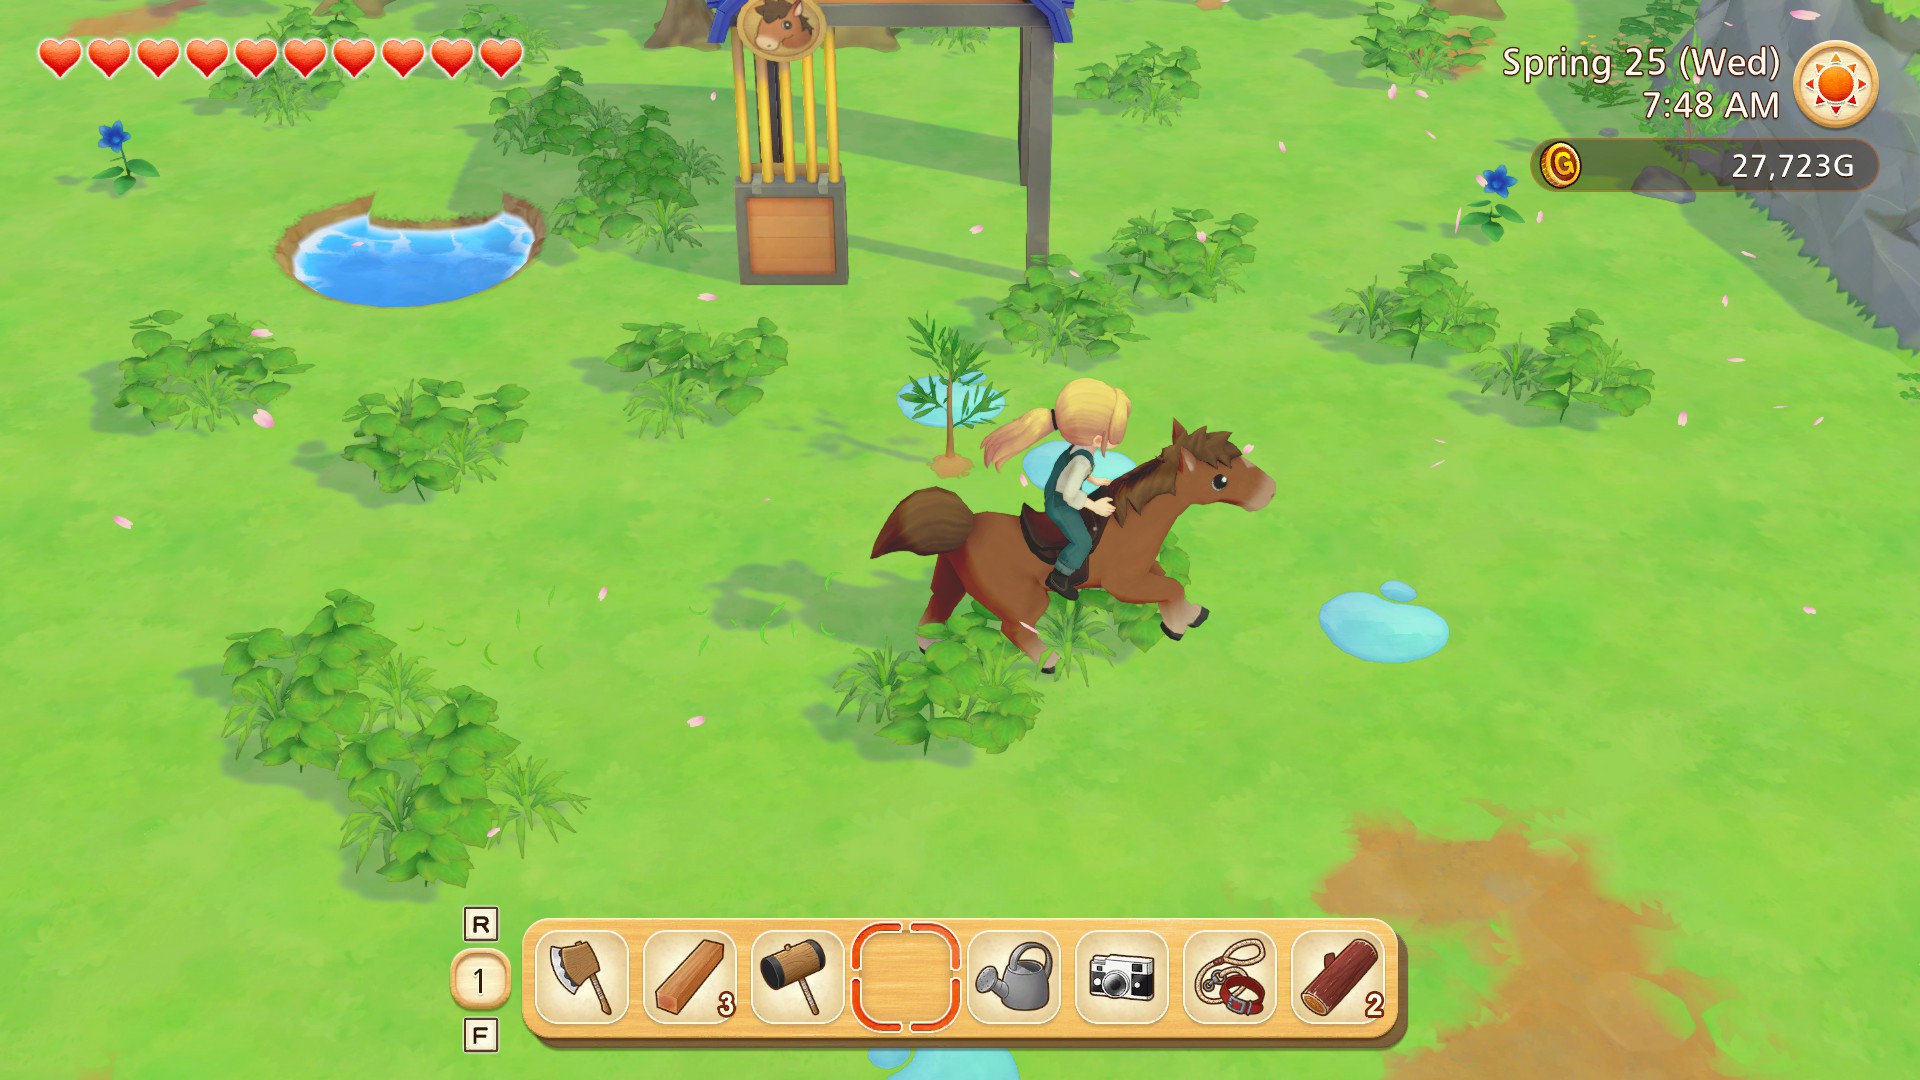 My protagonist rides a brown horse through a grassy field.